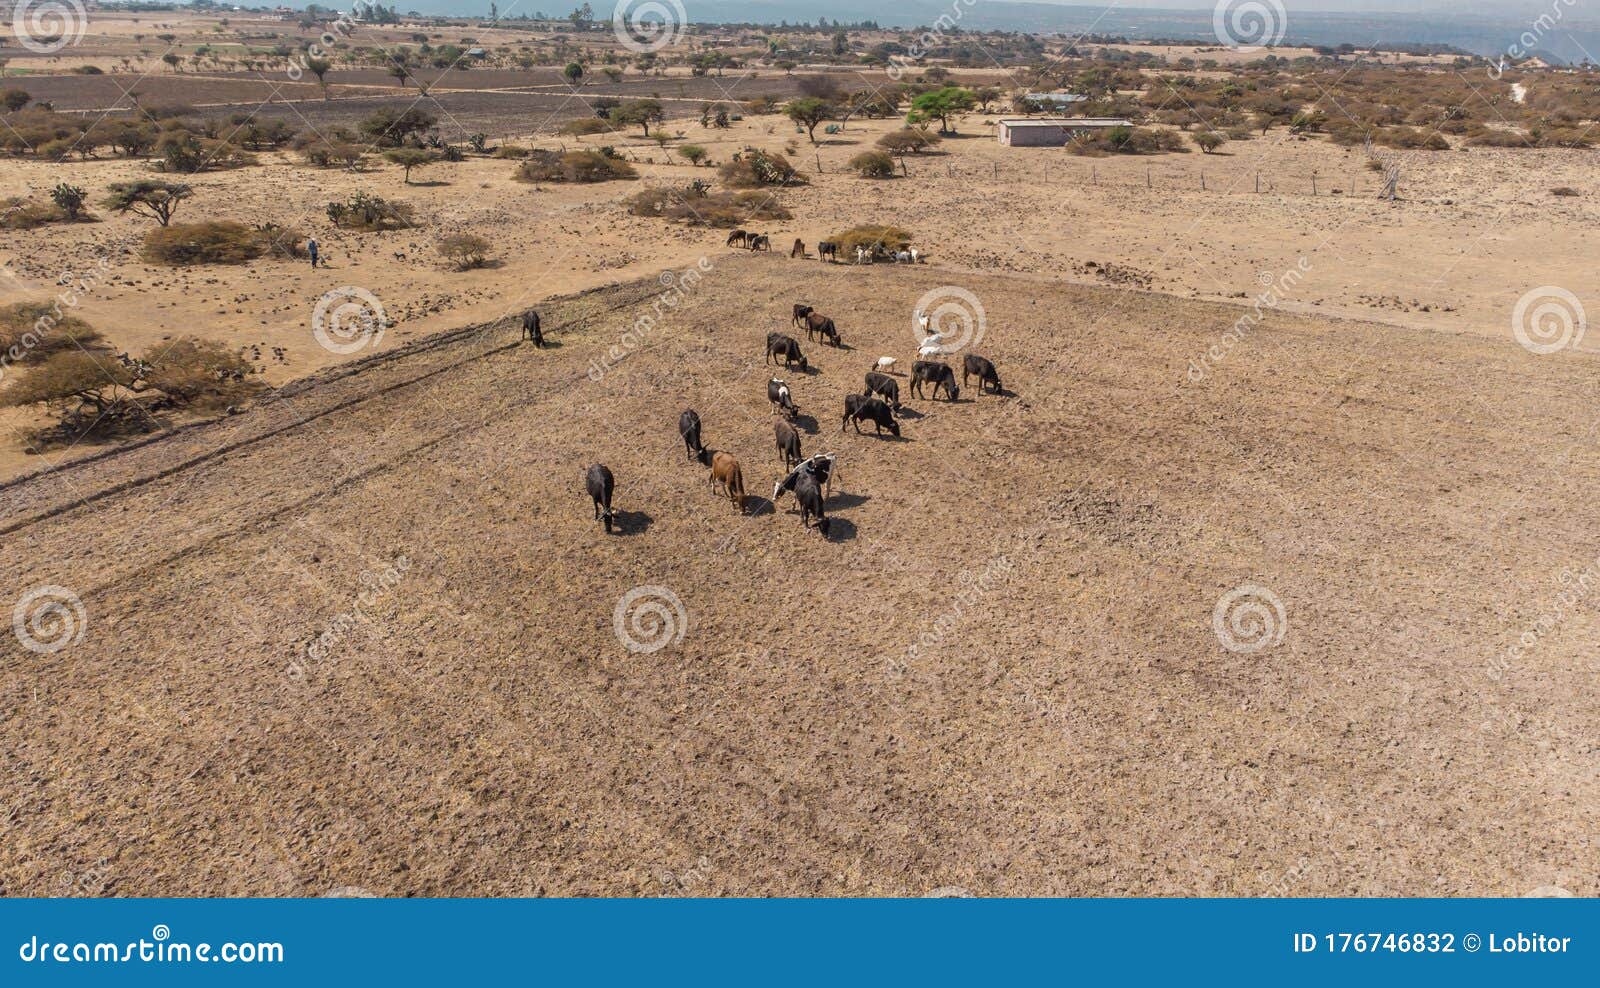 cowboy tending cattle on dry plain in peÃÂ±a al aire in the state of hidalgo